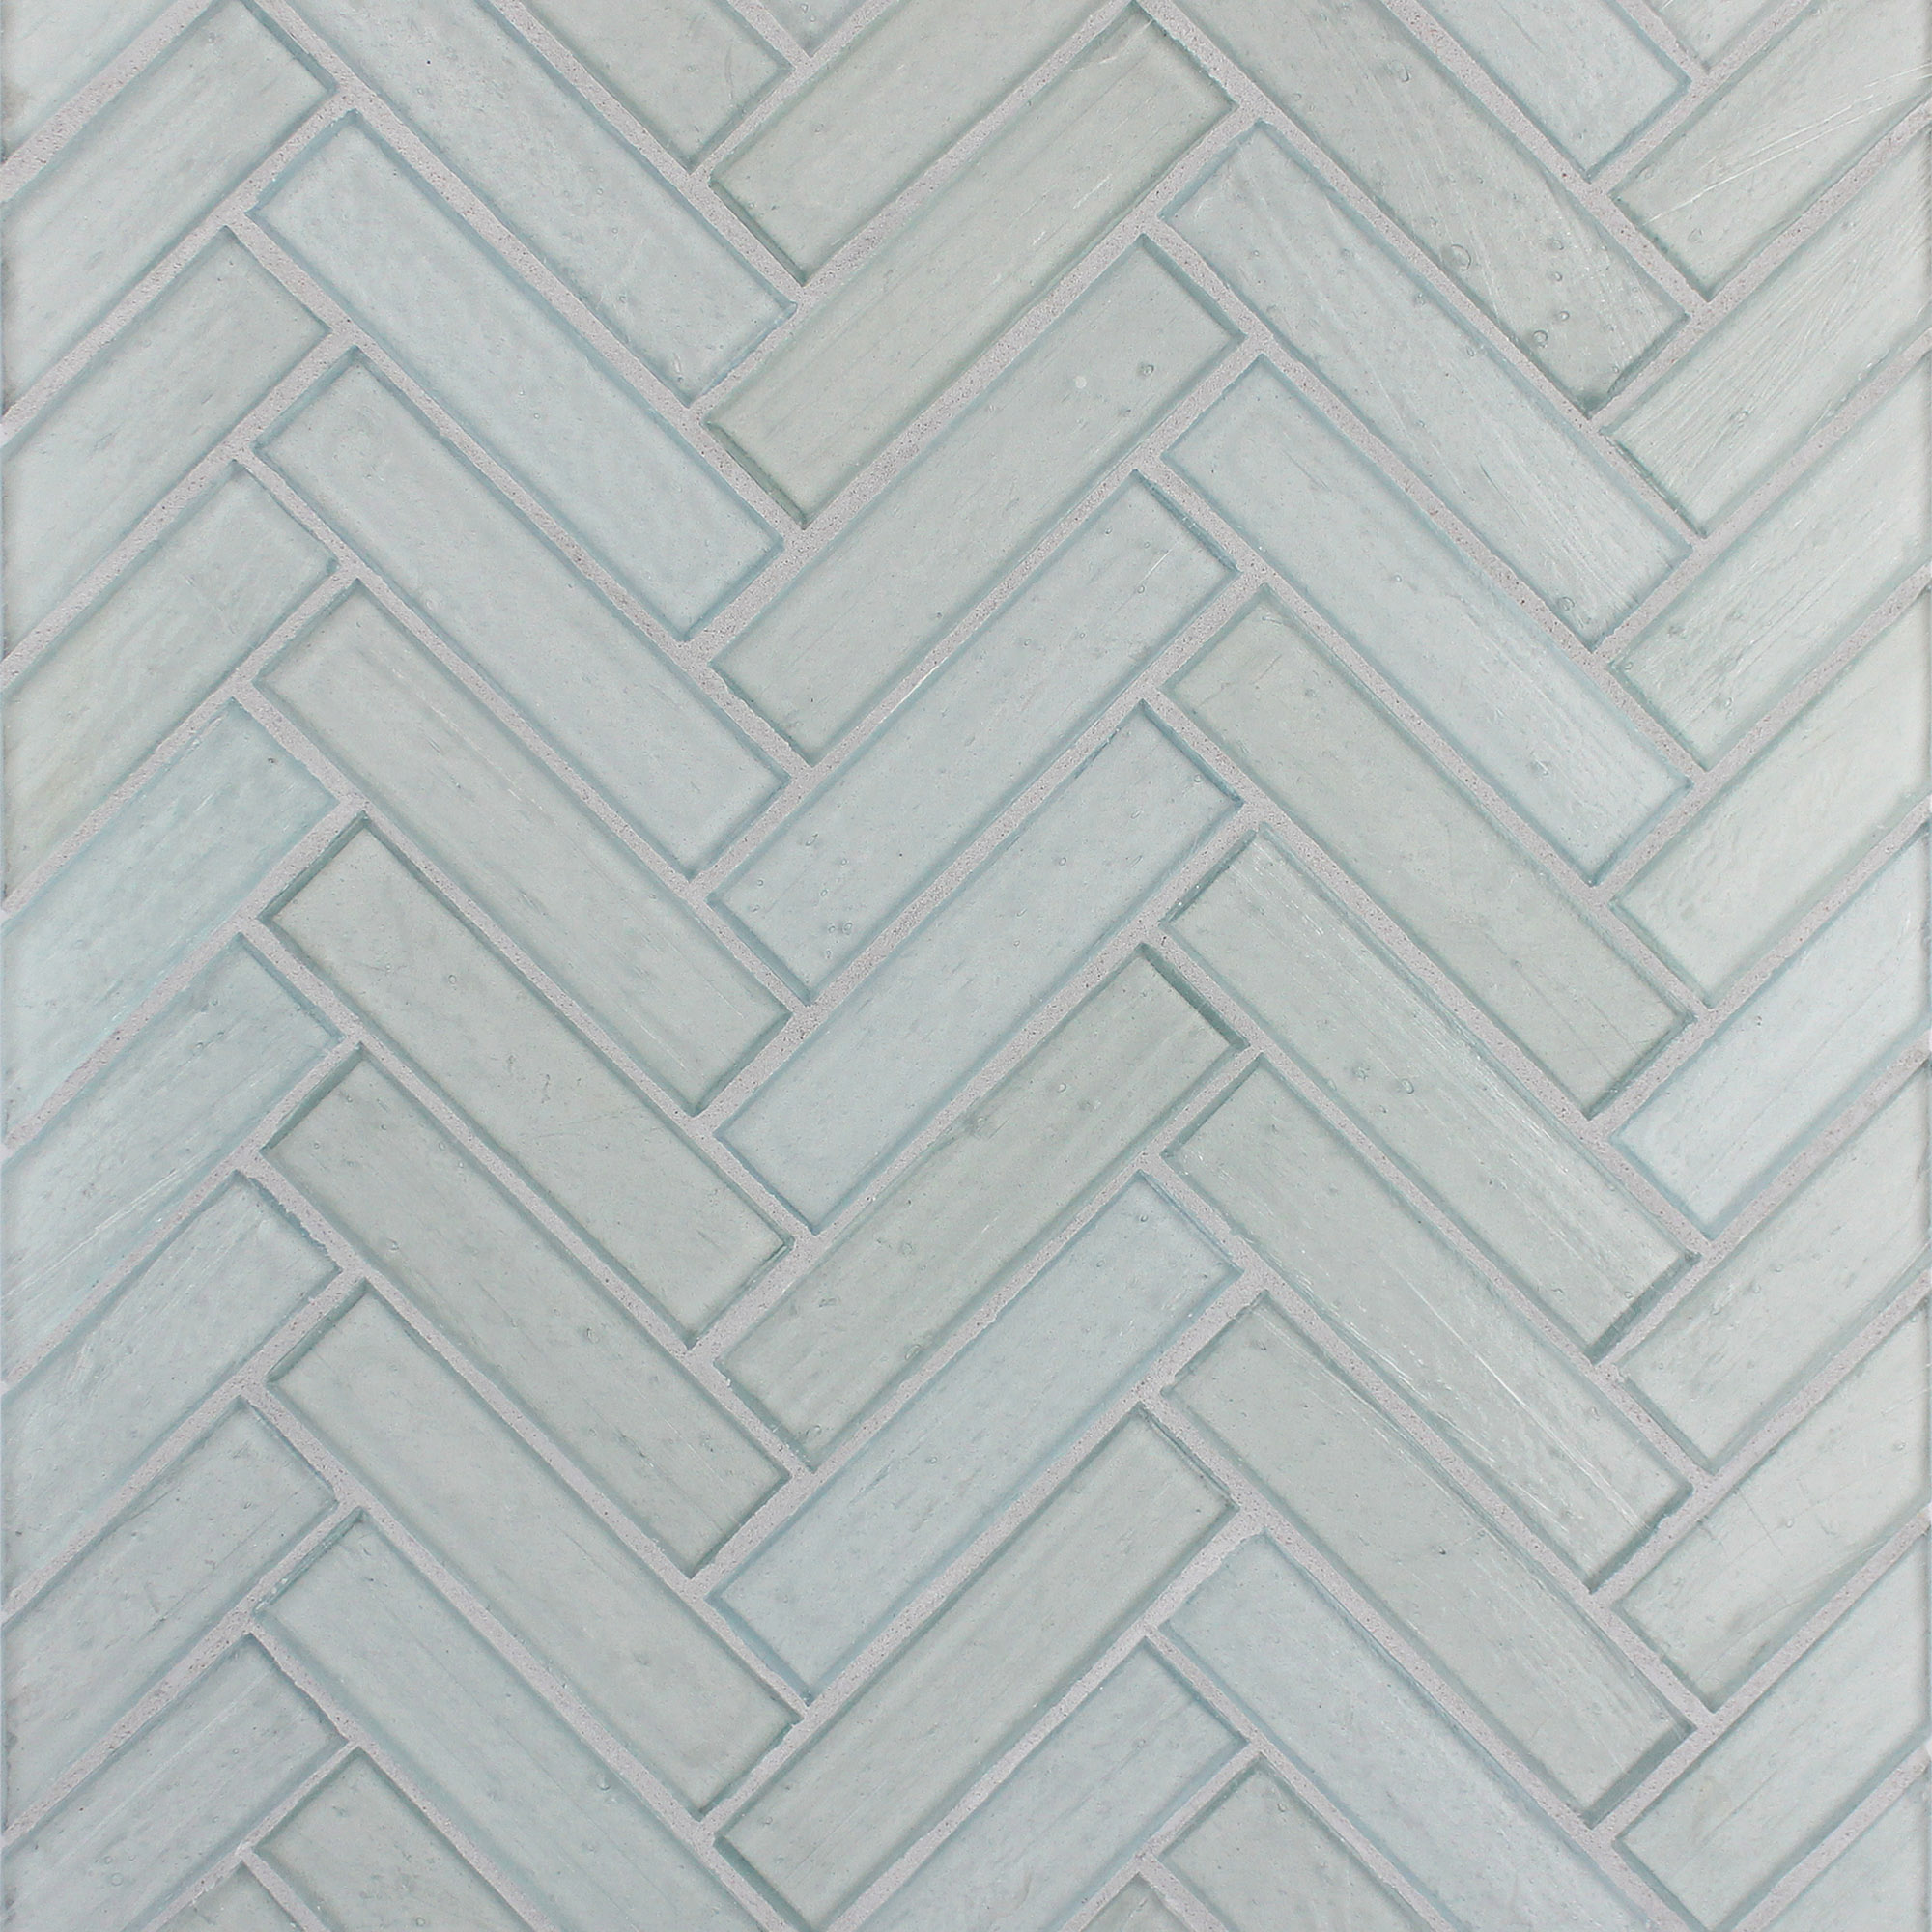 Mizumi Glass Tile Herringbone Pattern